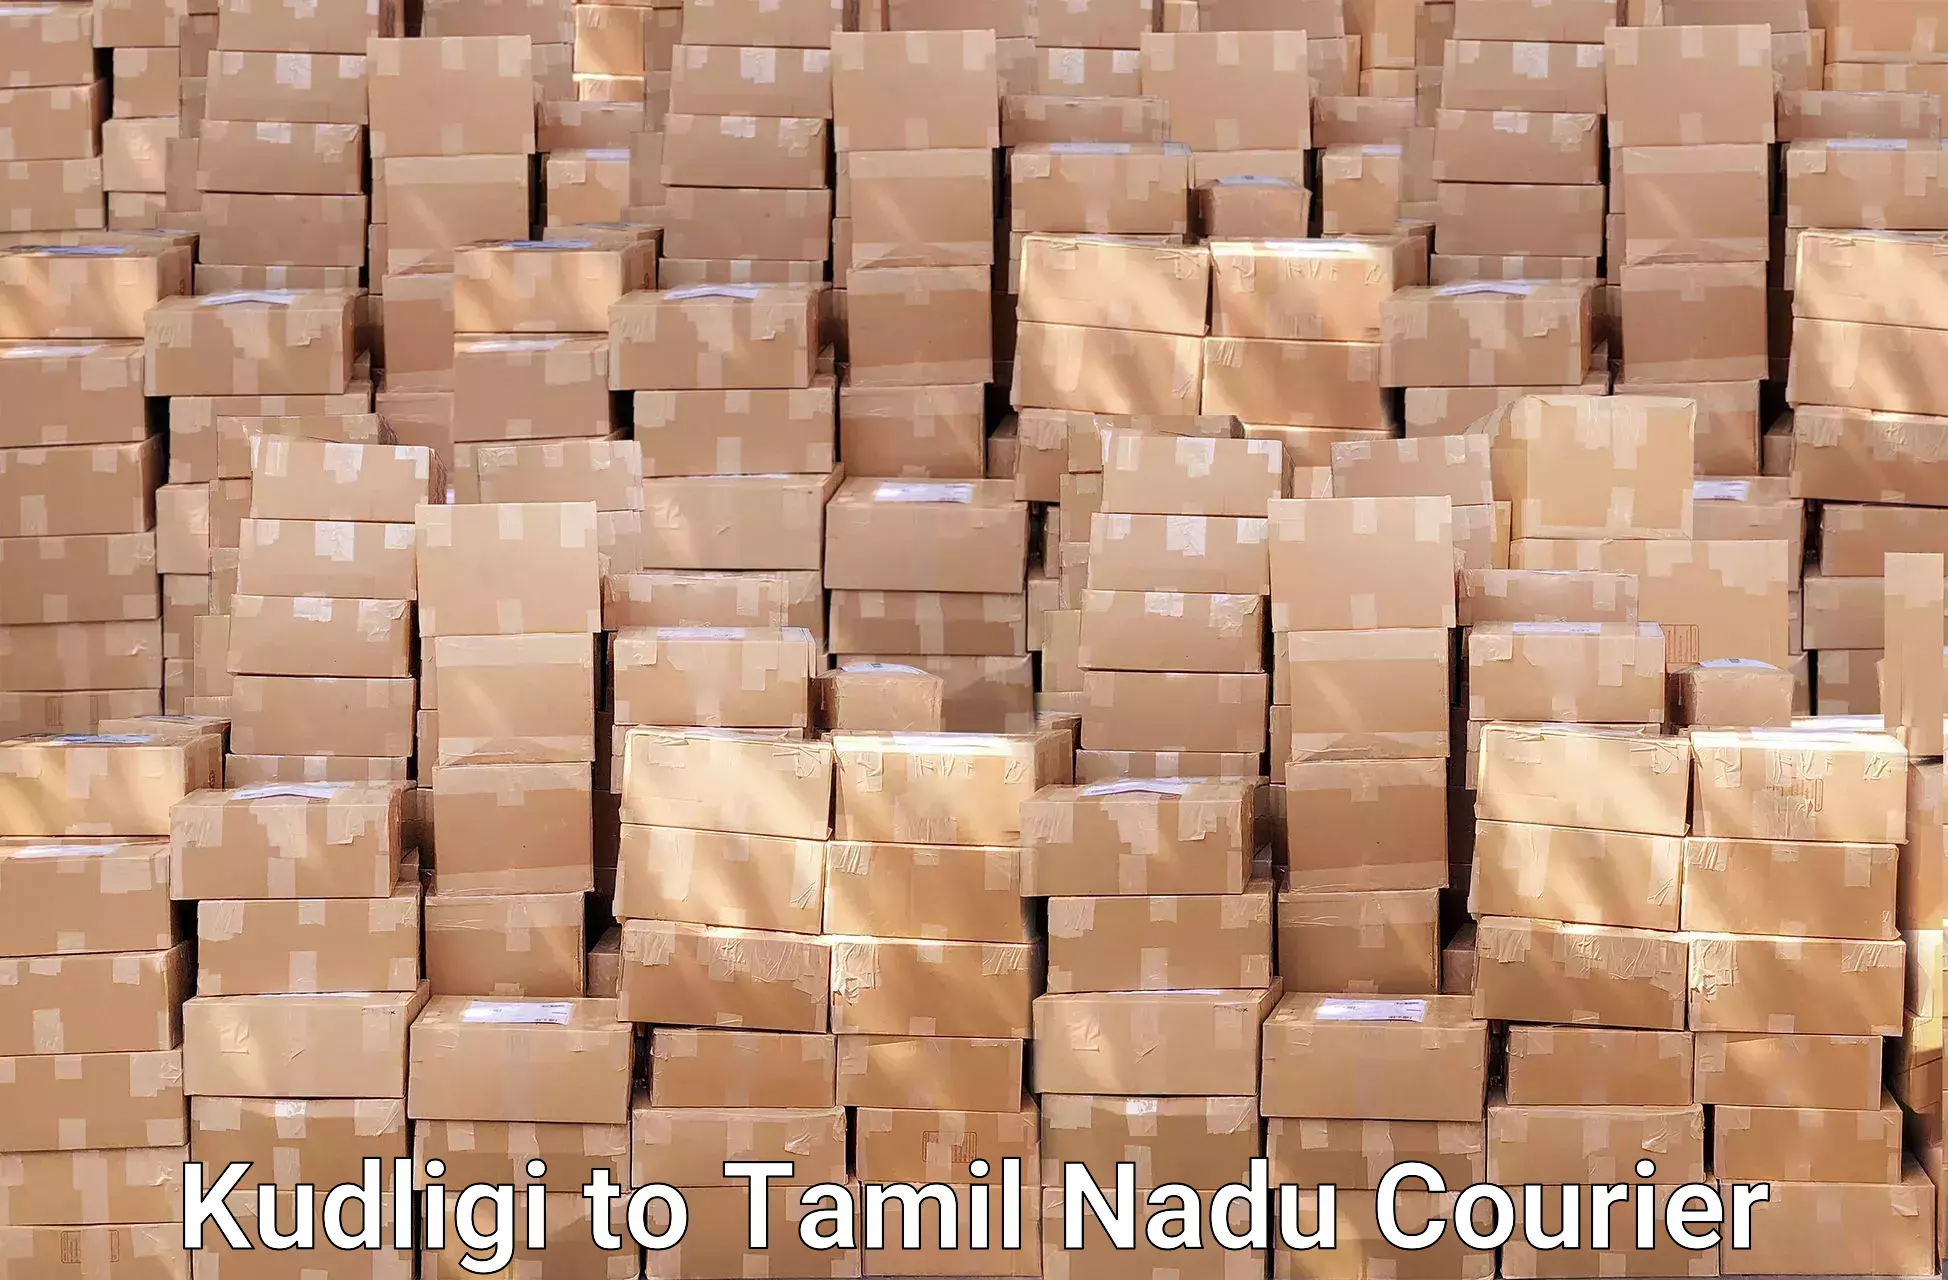 Professional moving company Kudligi to Tamil Nadu